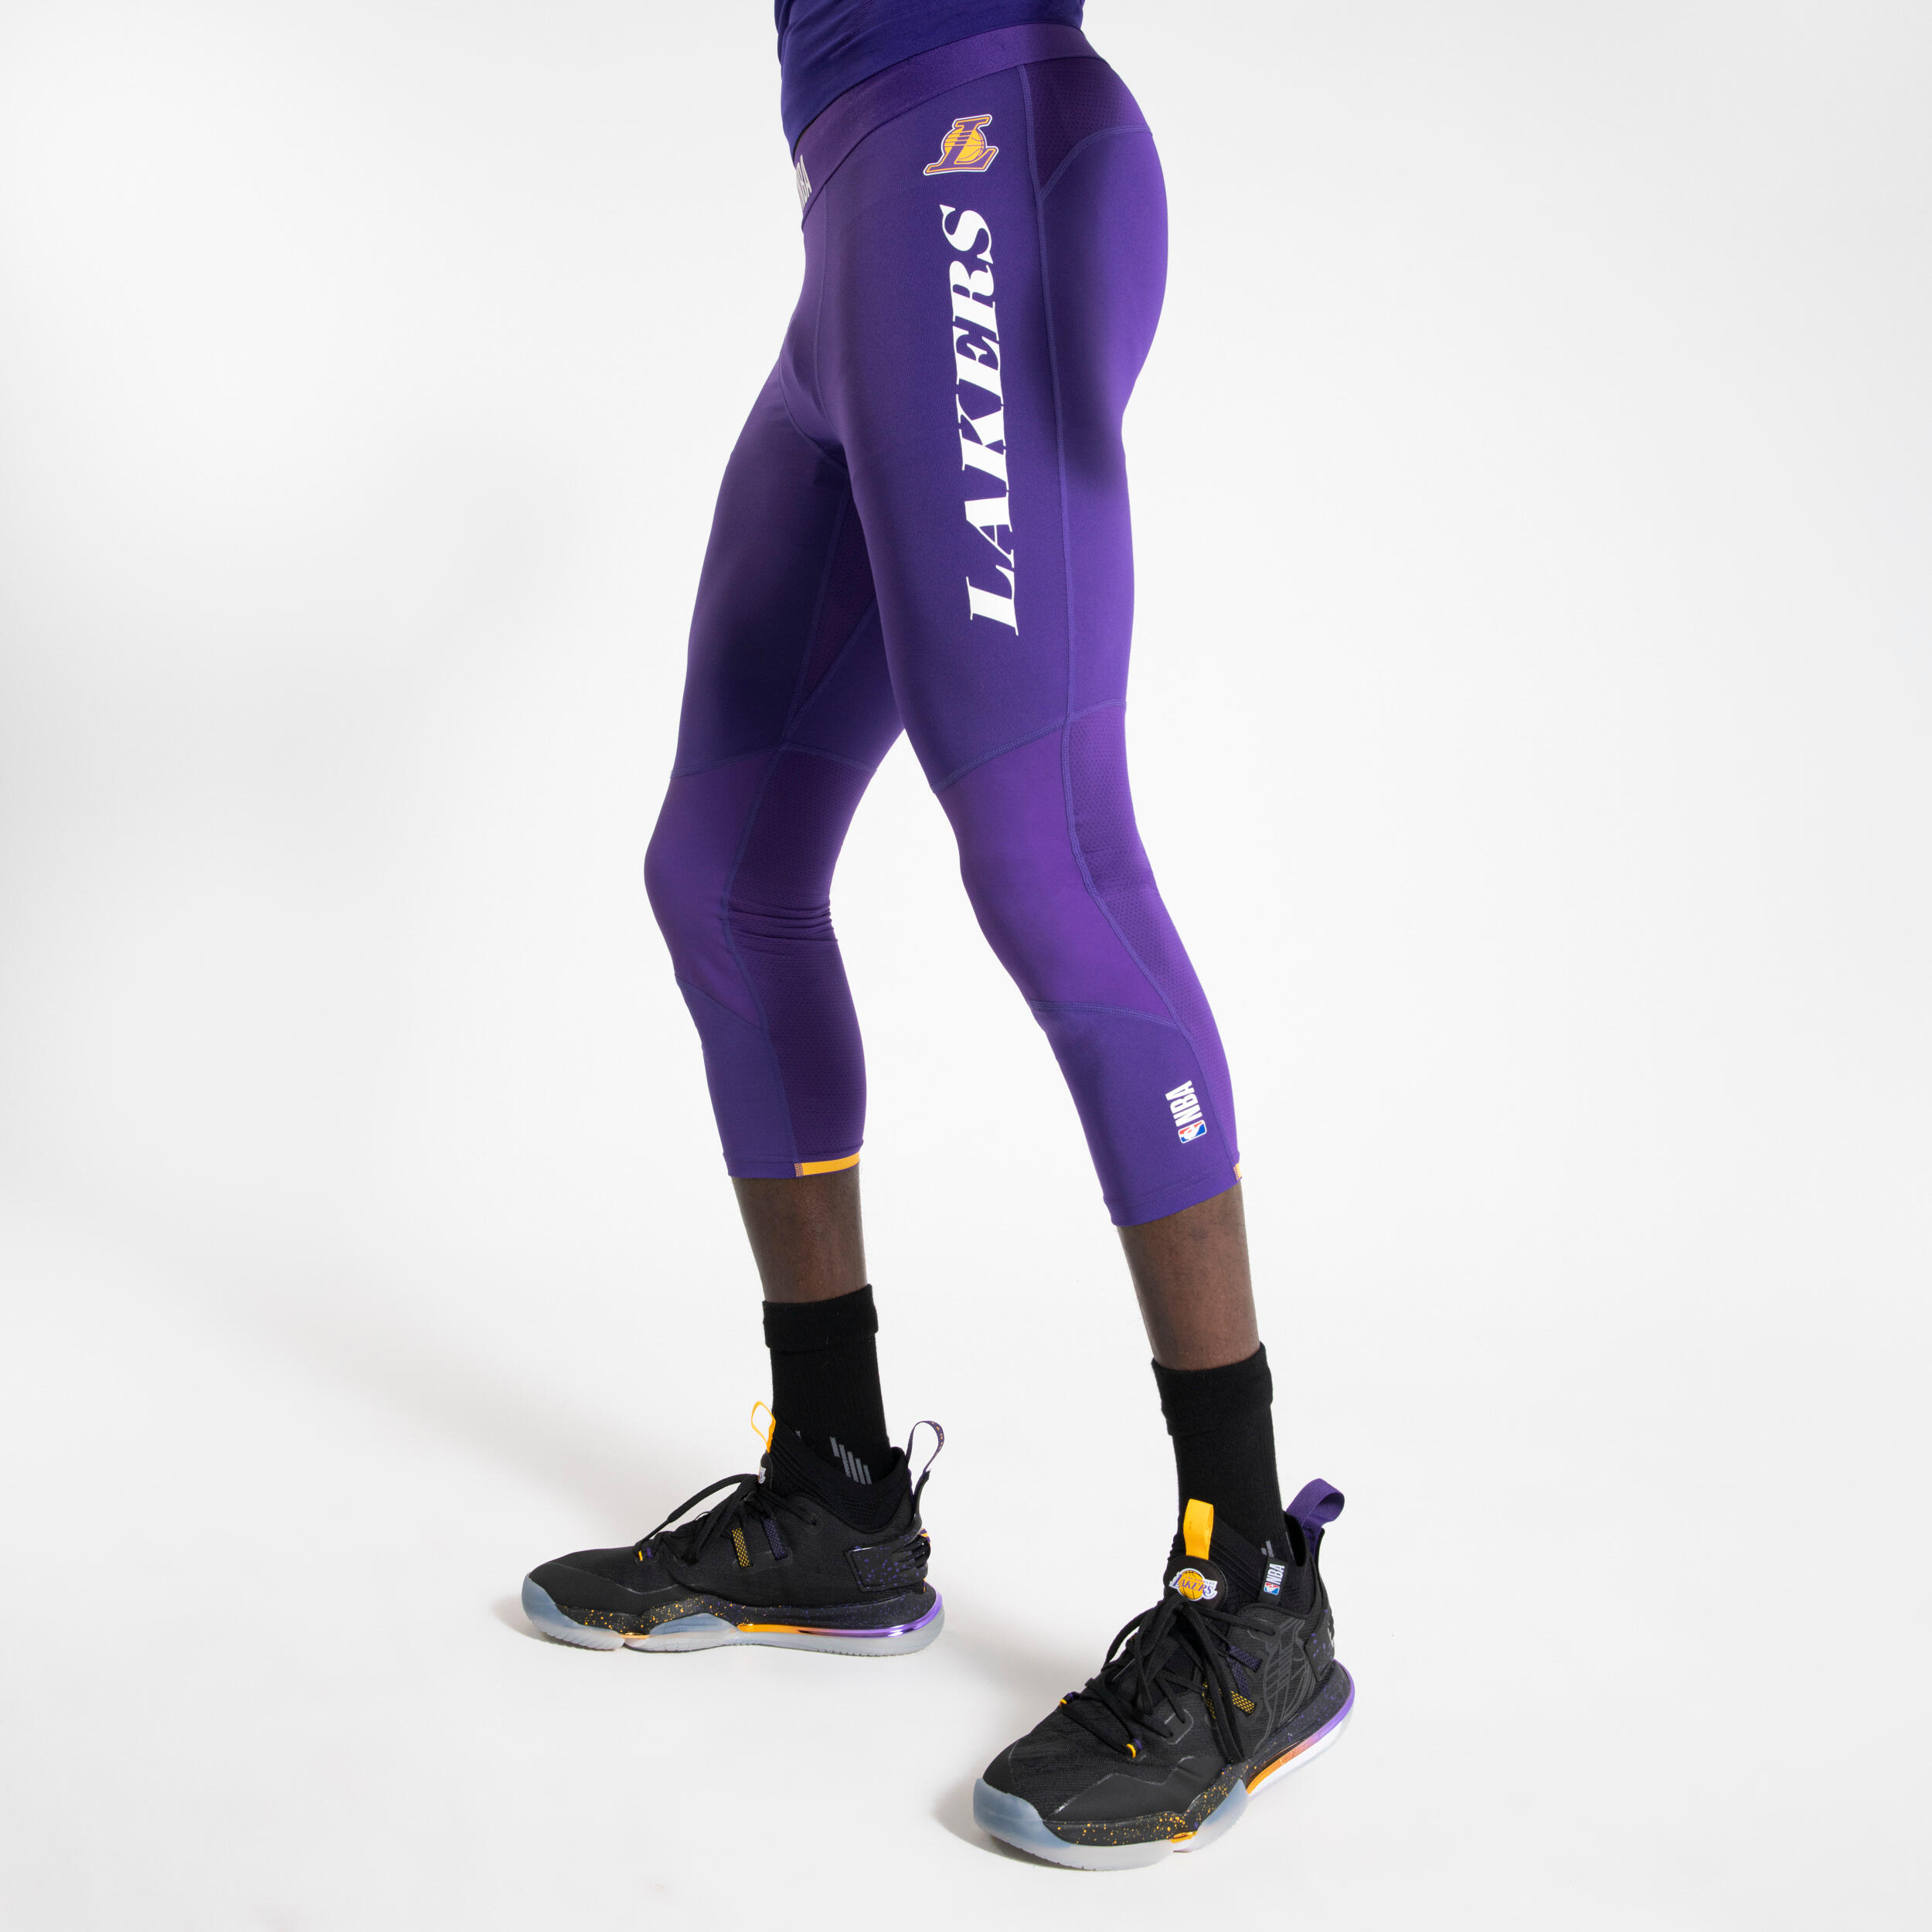 NBA compression leggings : r/Pandabuy